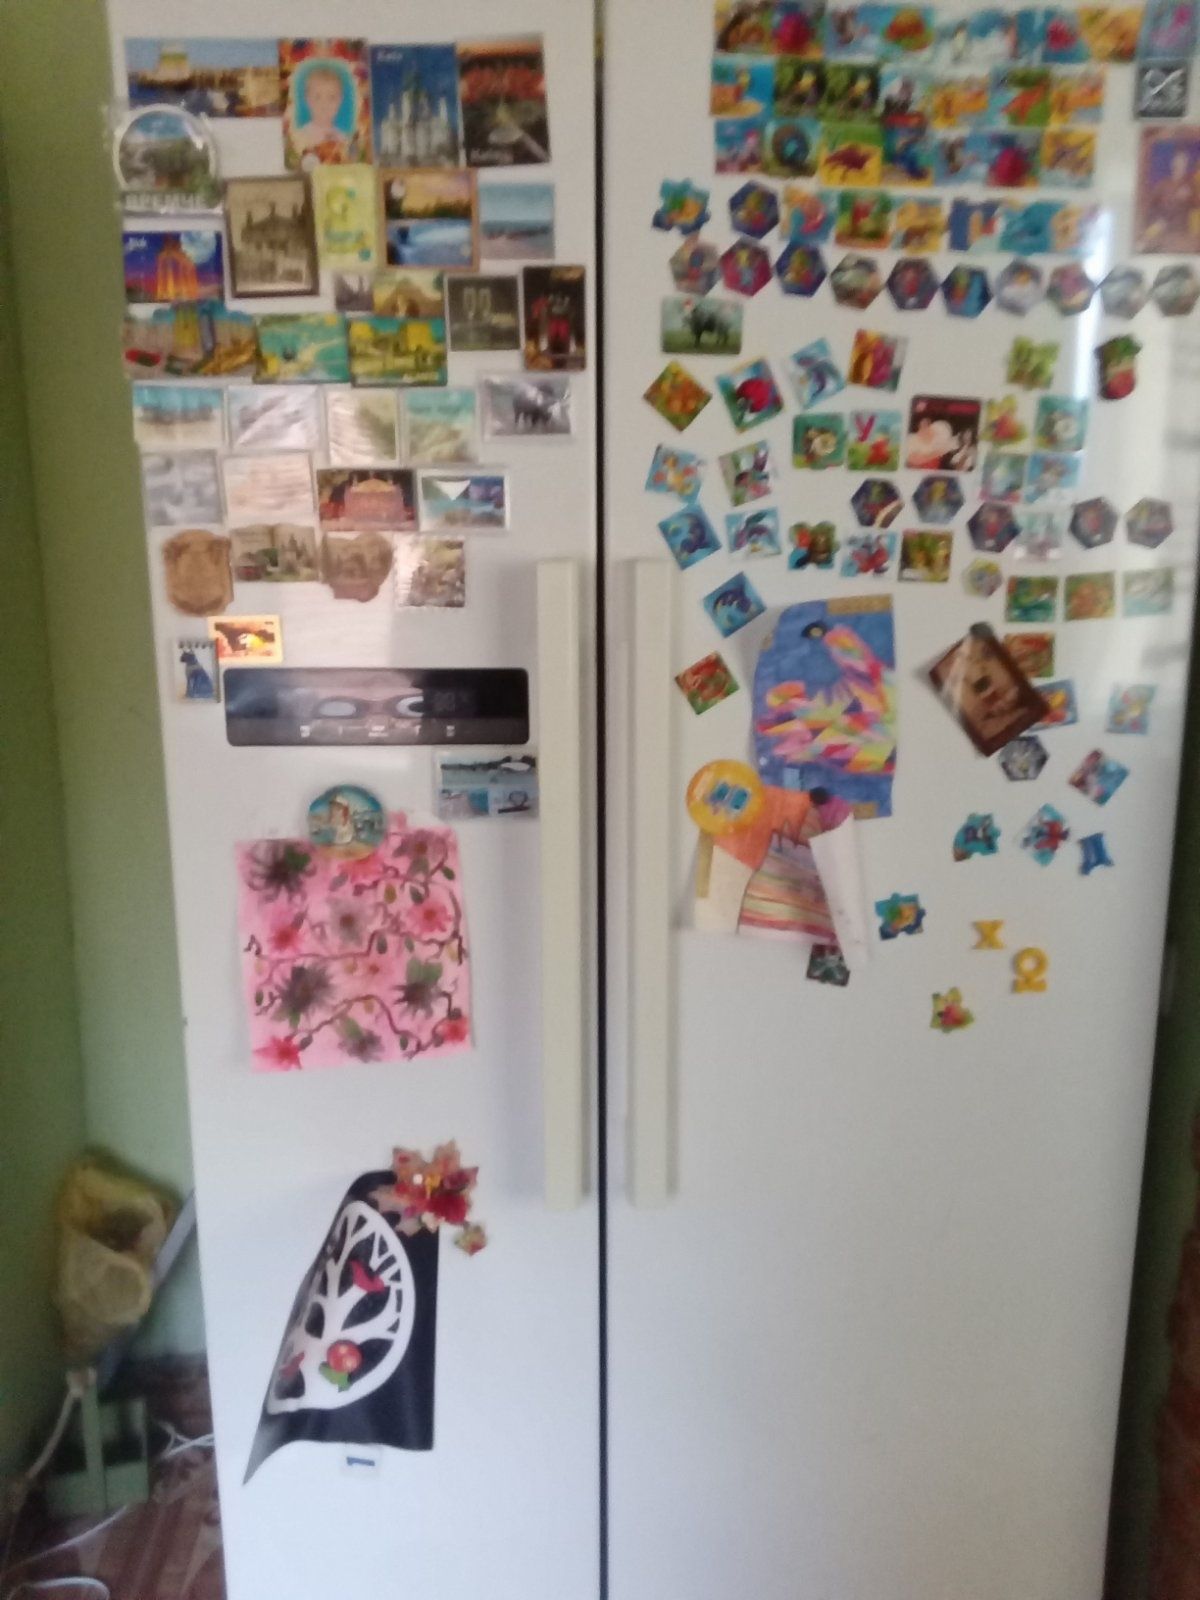 Холодильник side by side